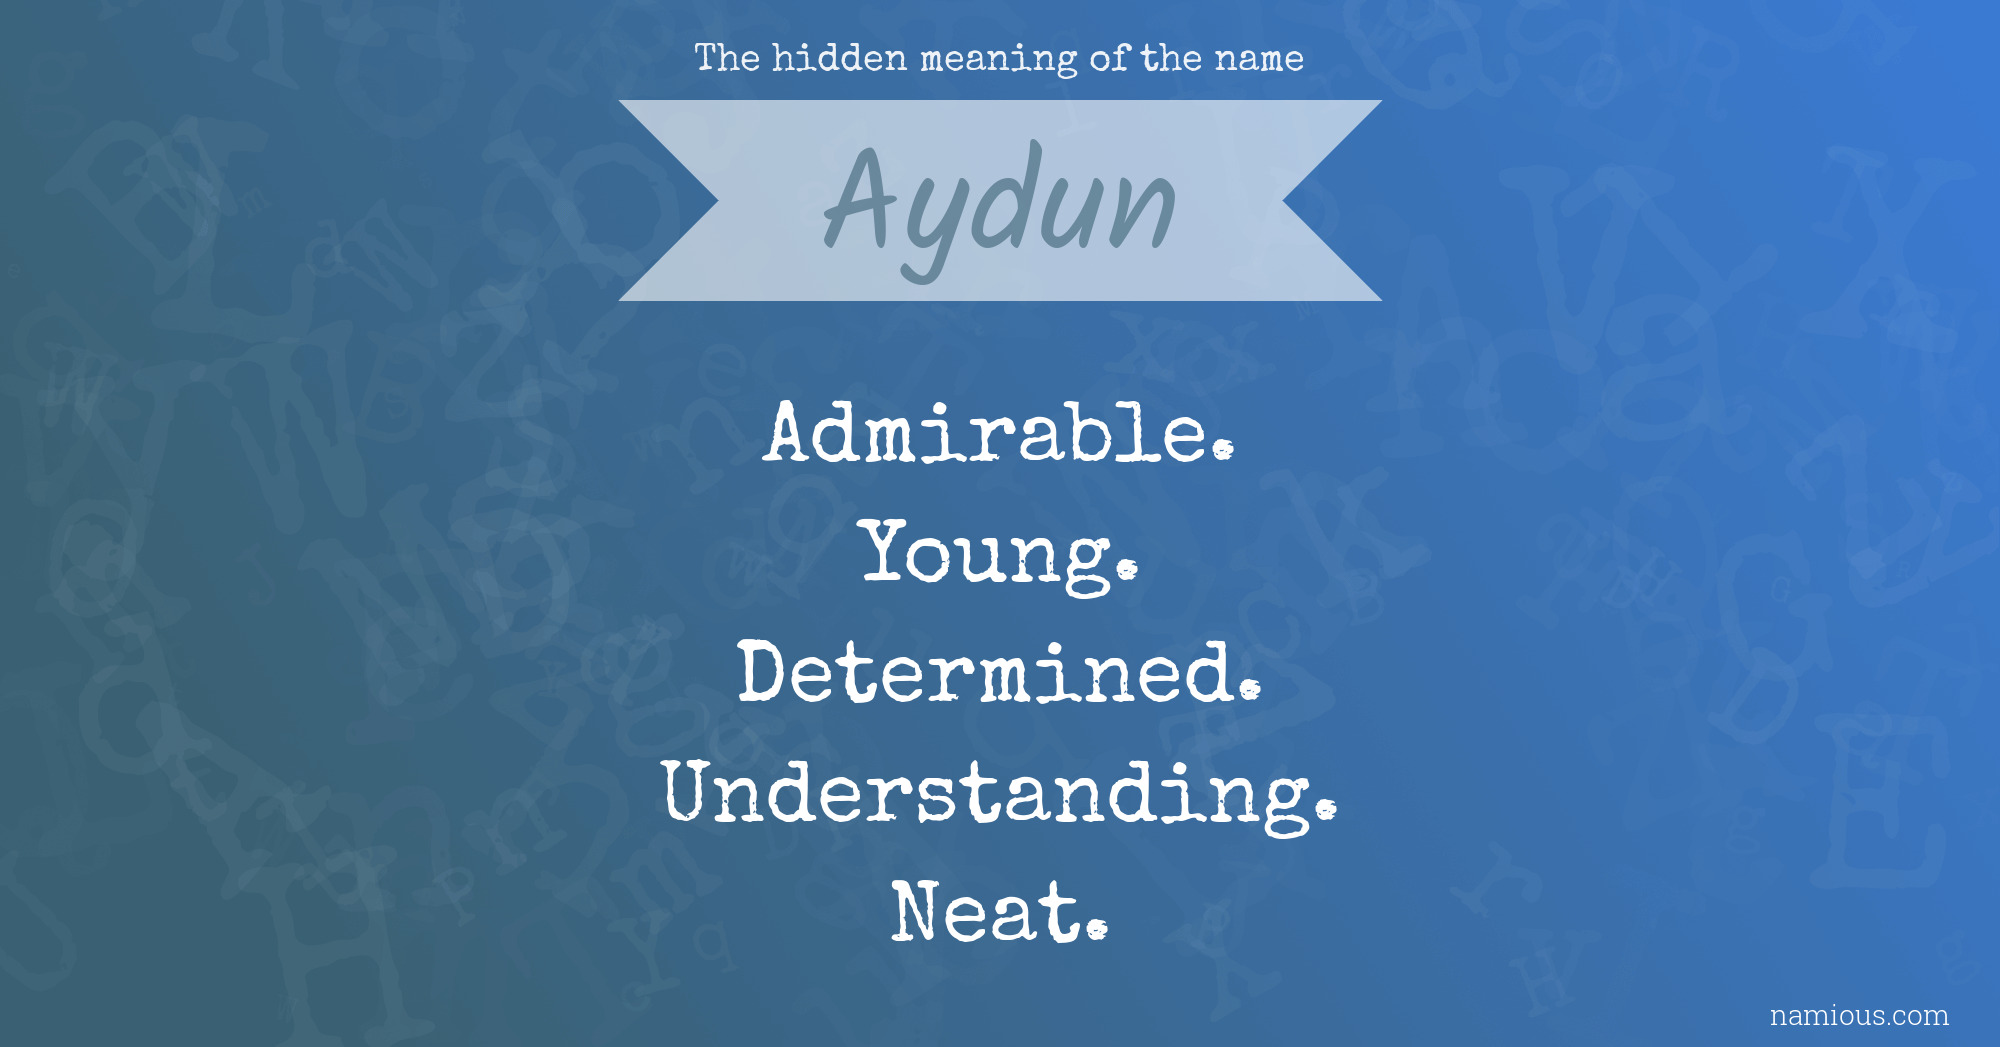 The hidden meaning of the name Aydun